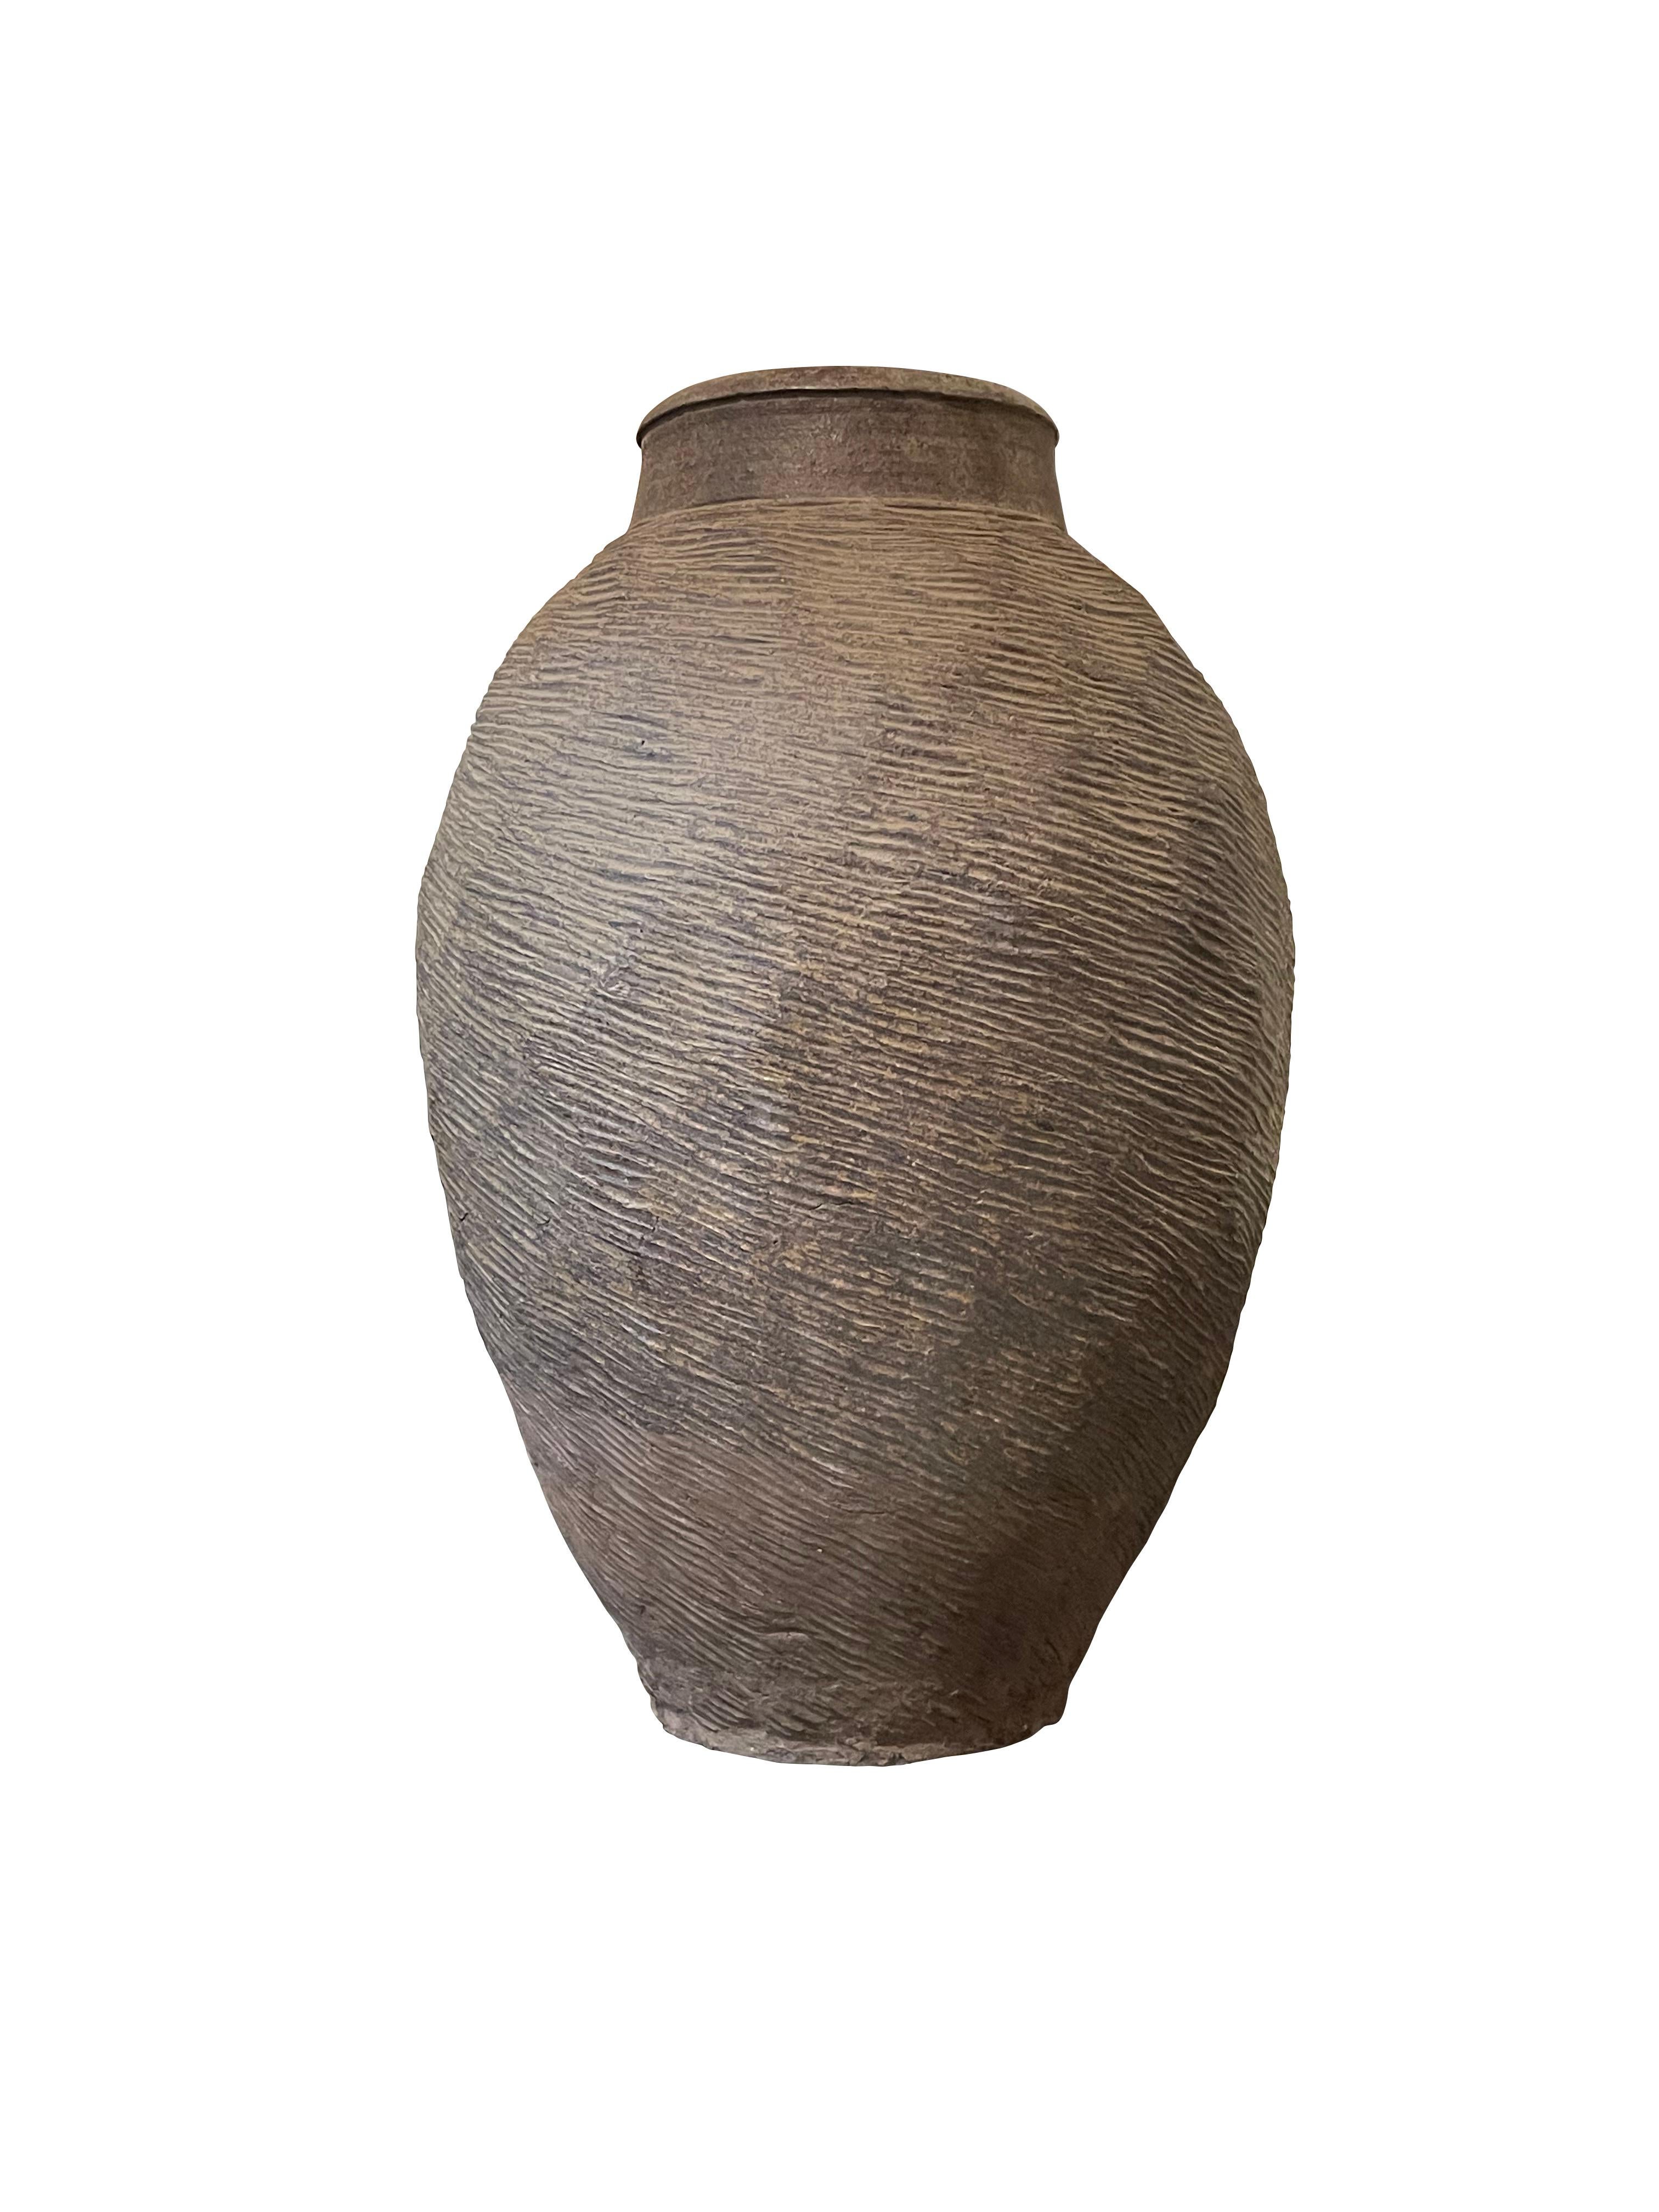 1940's Chinese horizontal raised rib textured vase.
Weathered brown color.